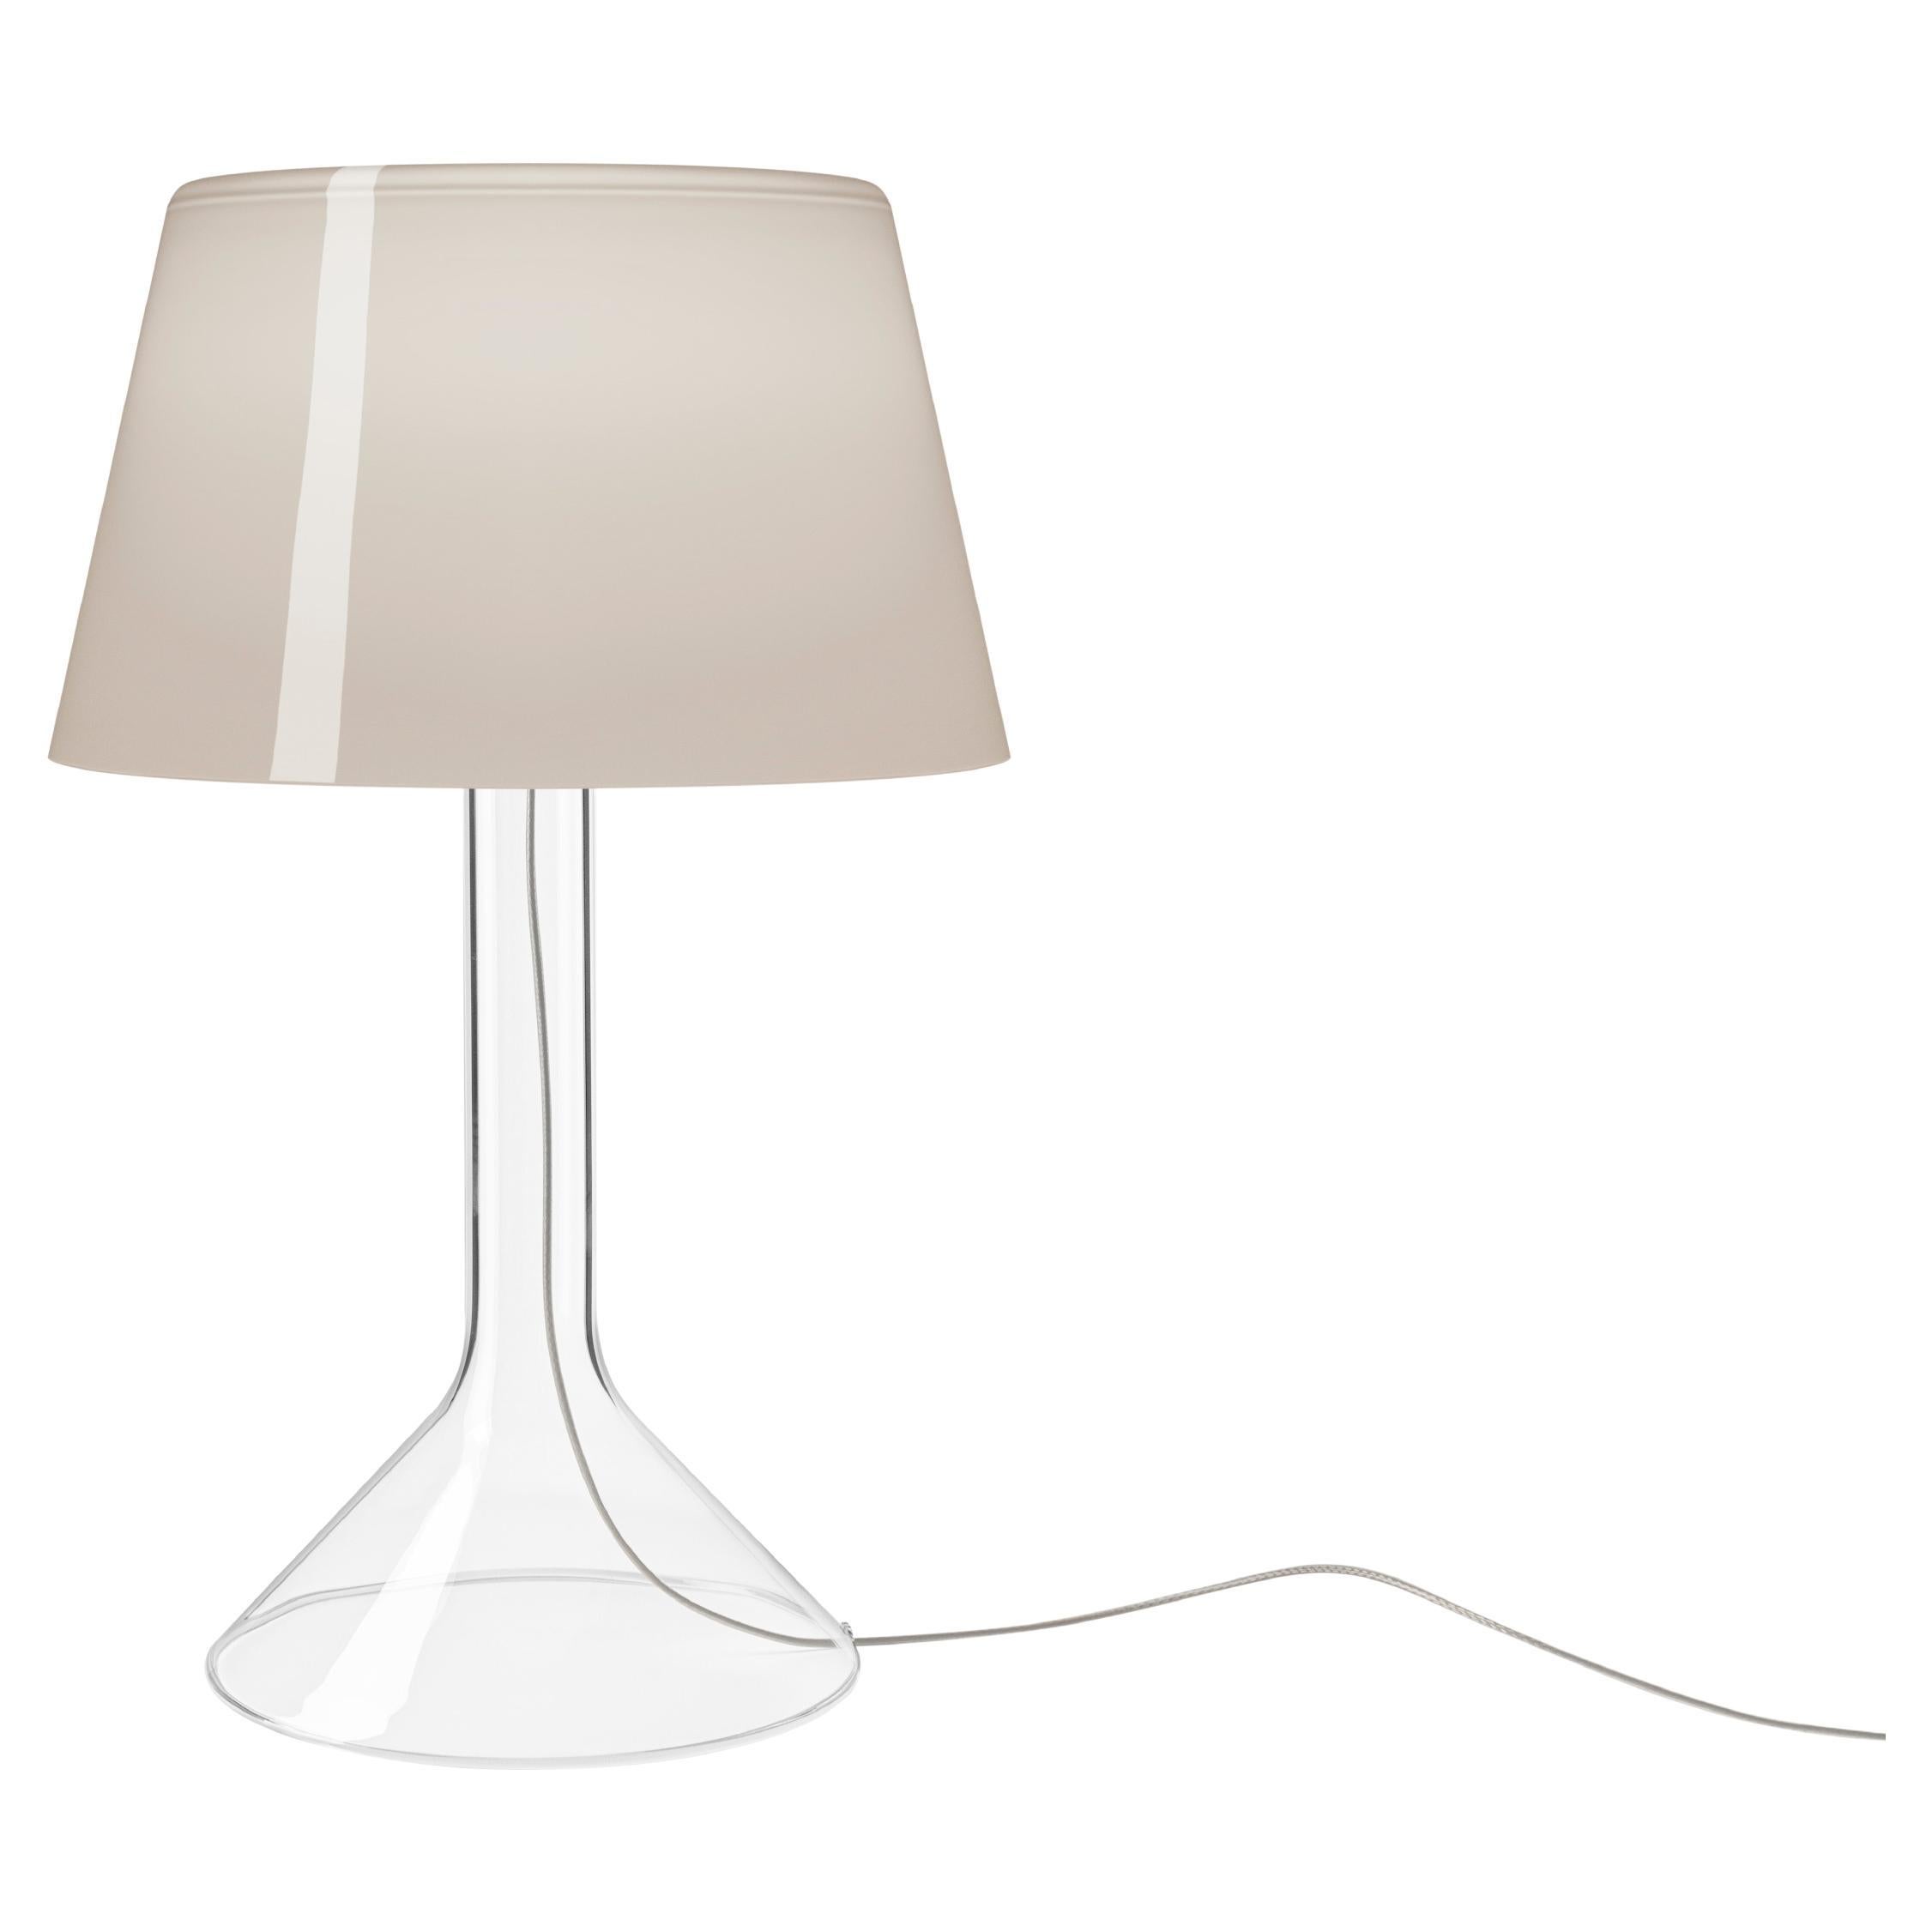 Foscarini Chapeau V Table Lamp by Rodolfo Dordoni